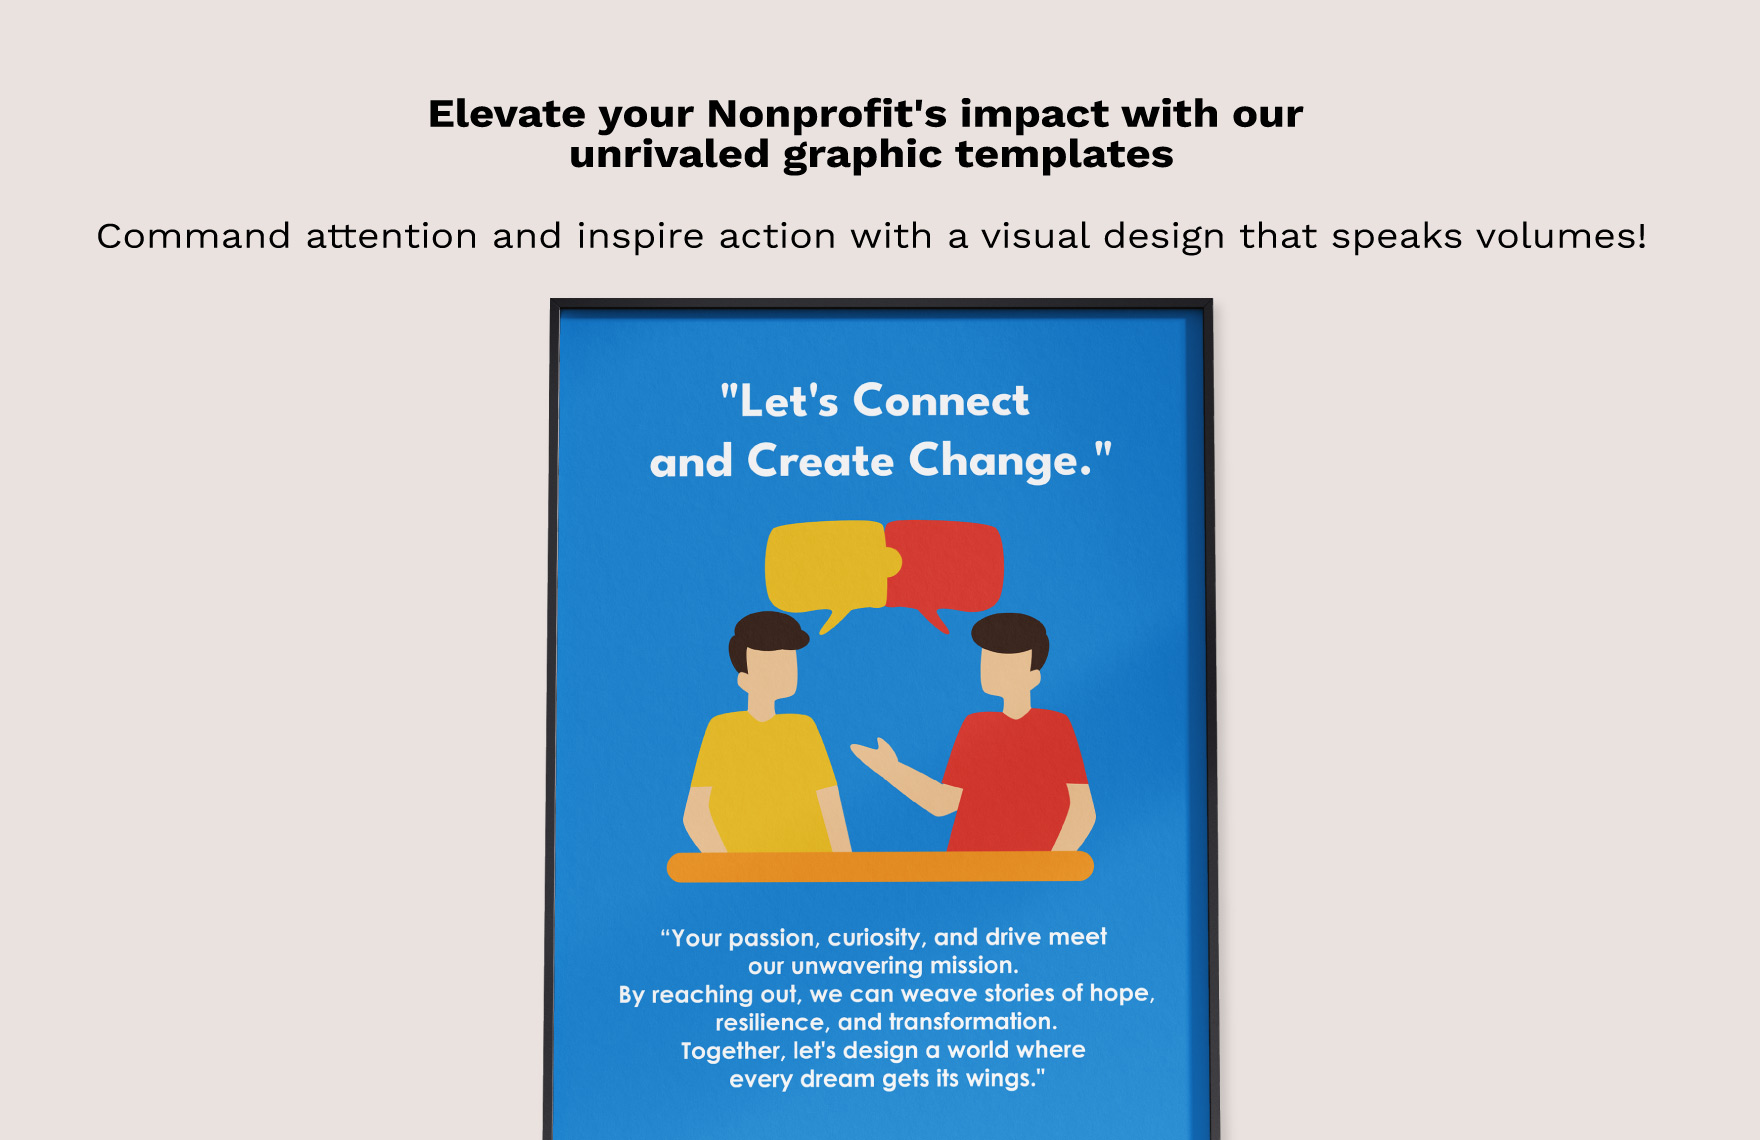 Nonprofit Organization Contact Information Signage Template